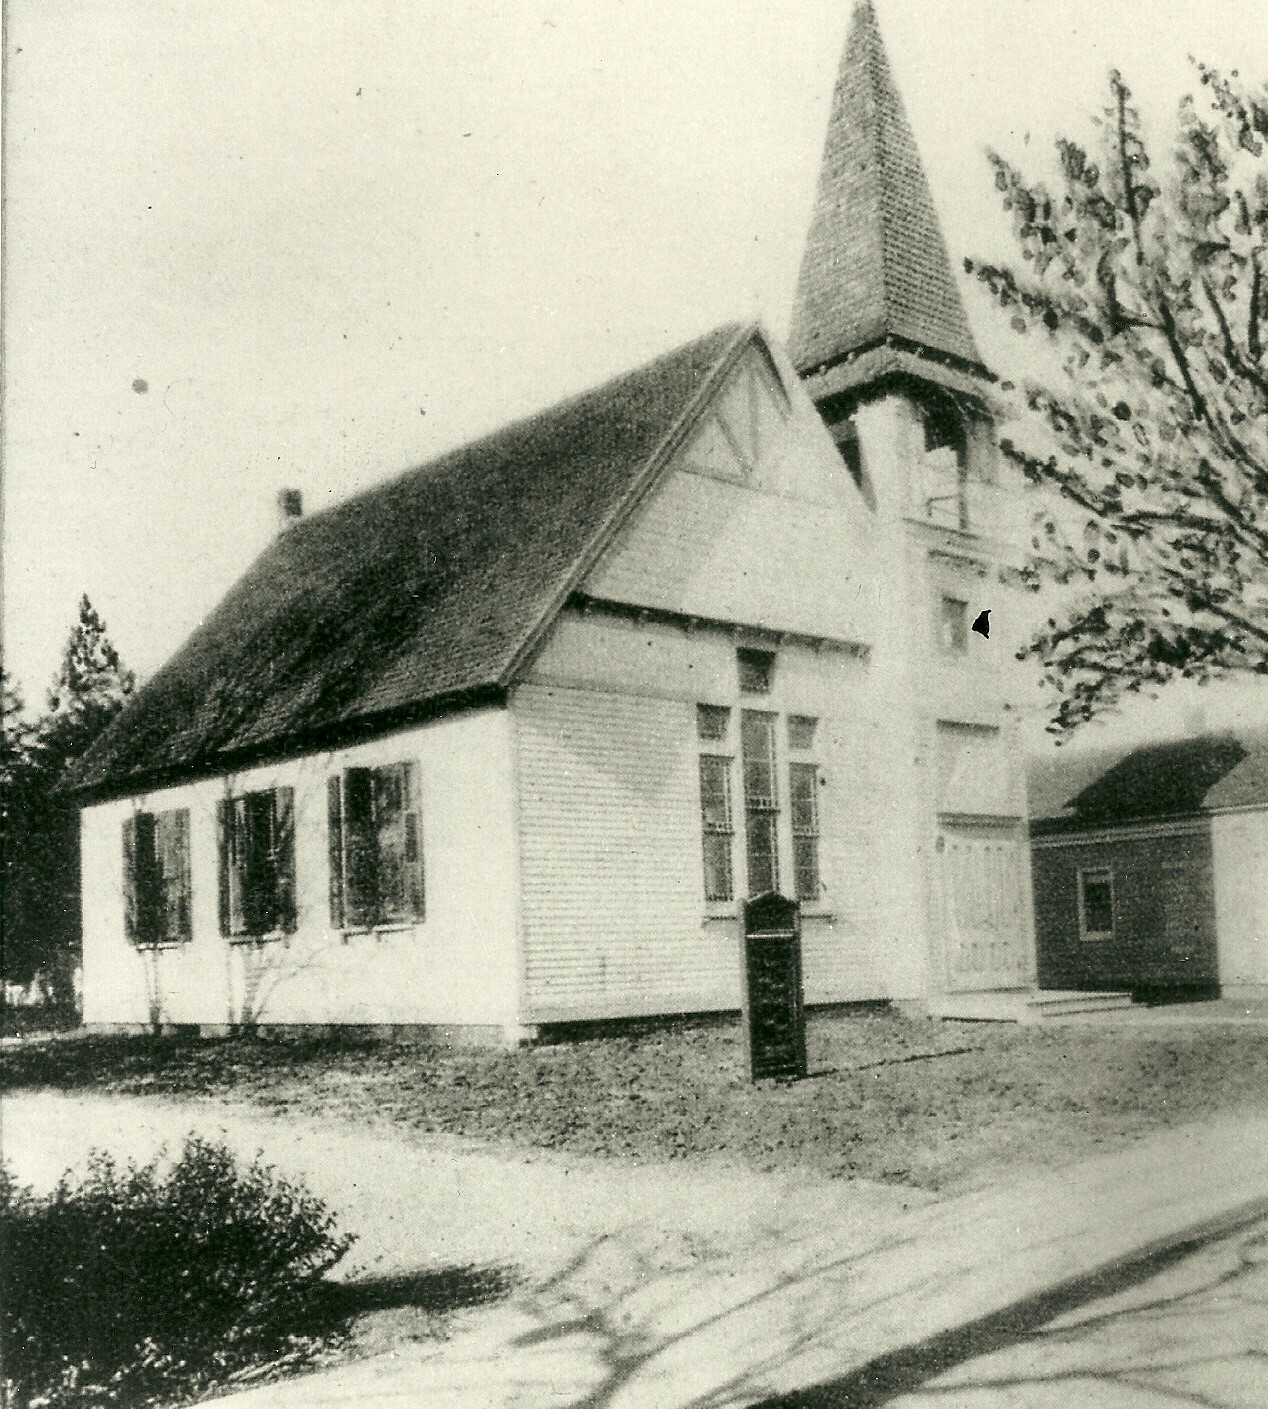 Originally the Methodist Episcopal Church, the circa-1882 building still stands today.